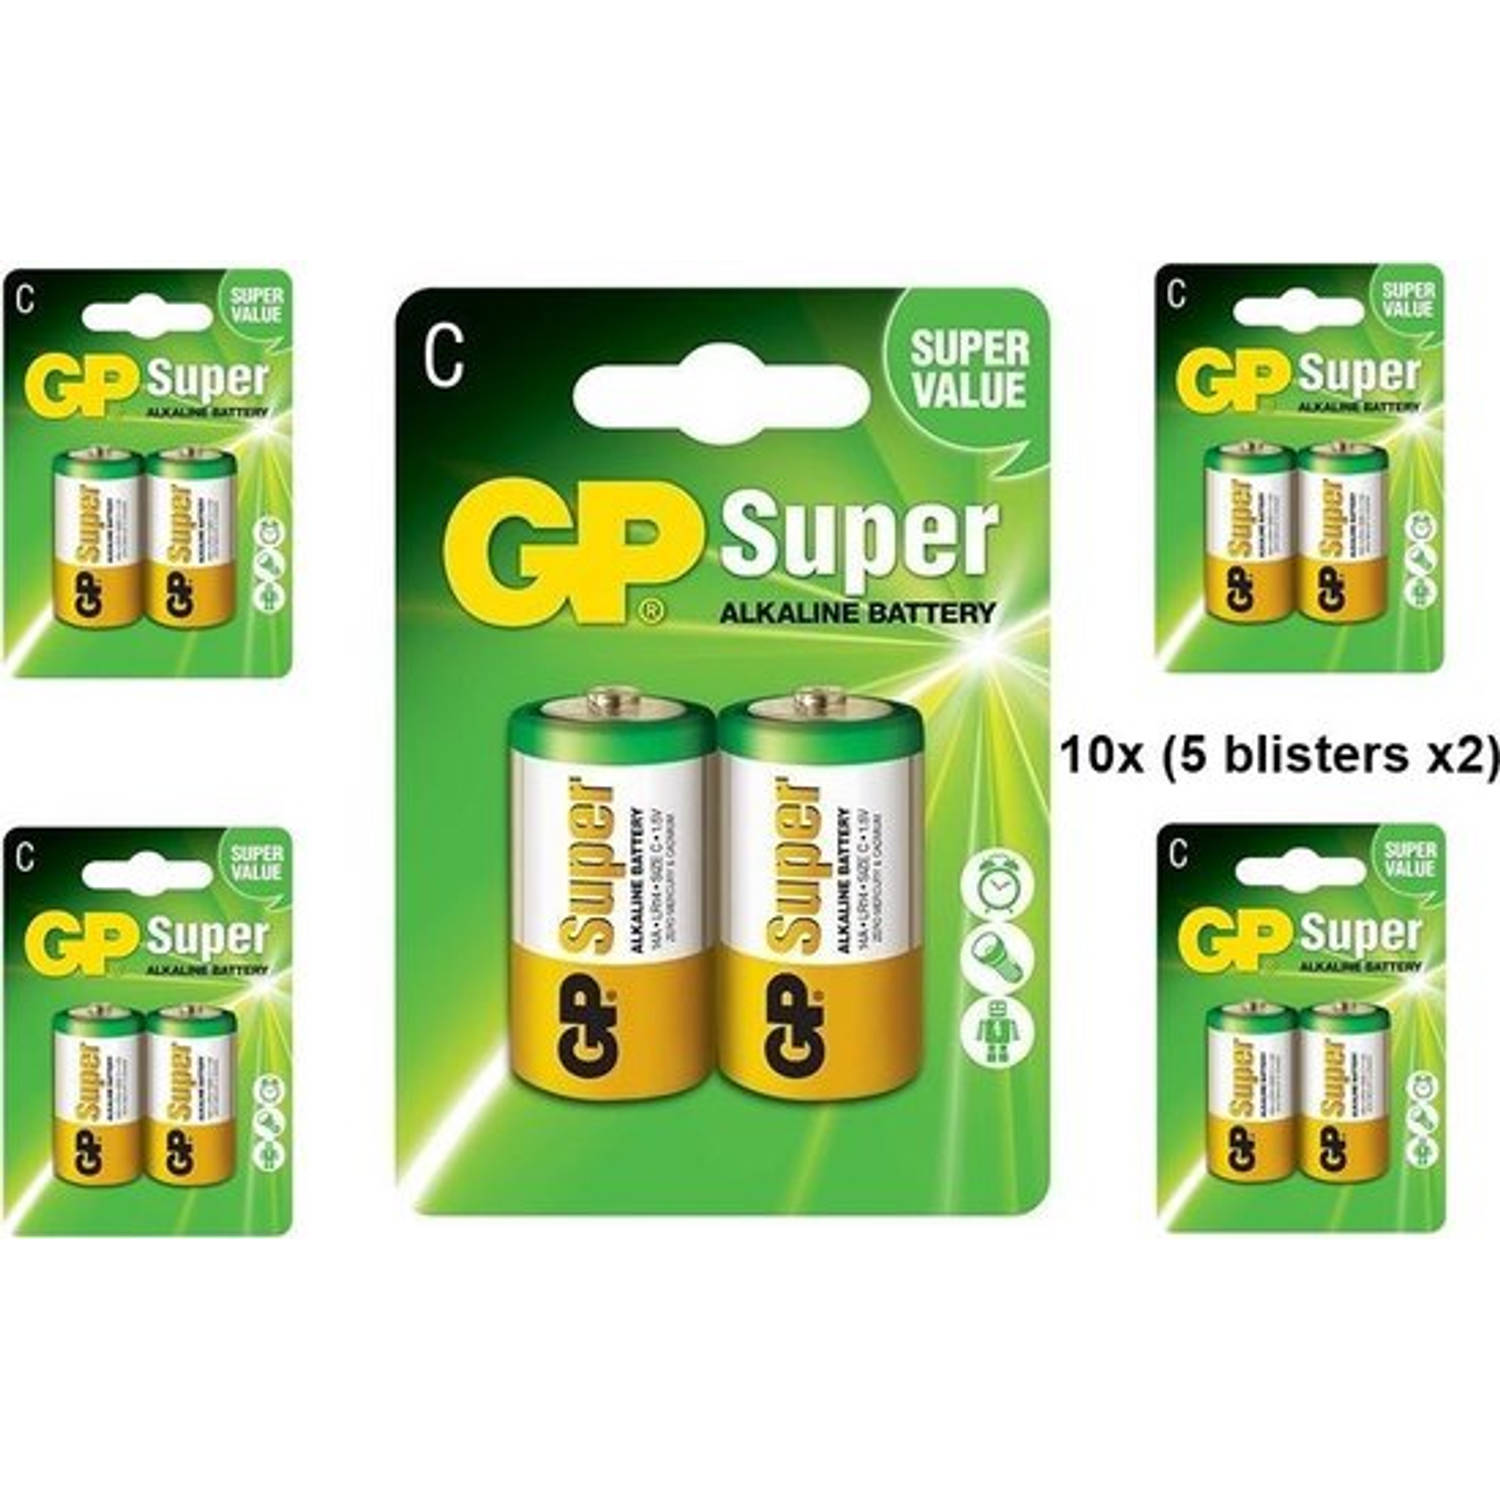 10 Stuks (5 Blisters a 2st) - GP LR14 R14 C-Cell Super Alkaline wegwerpbatterij